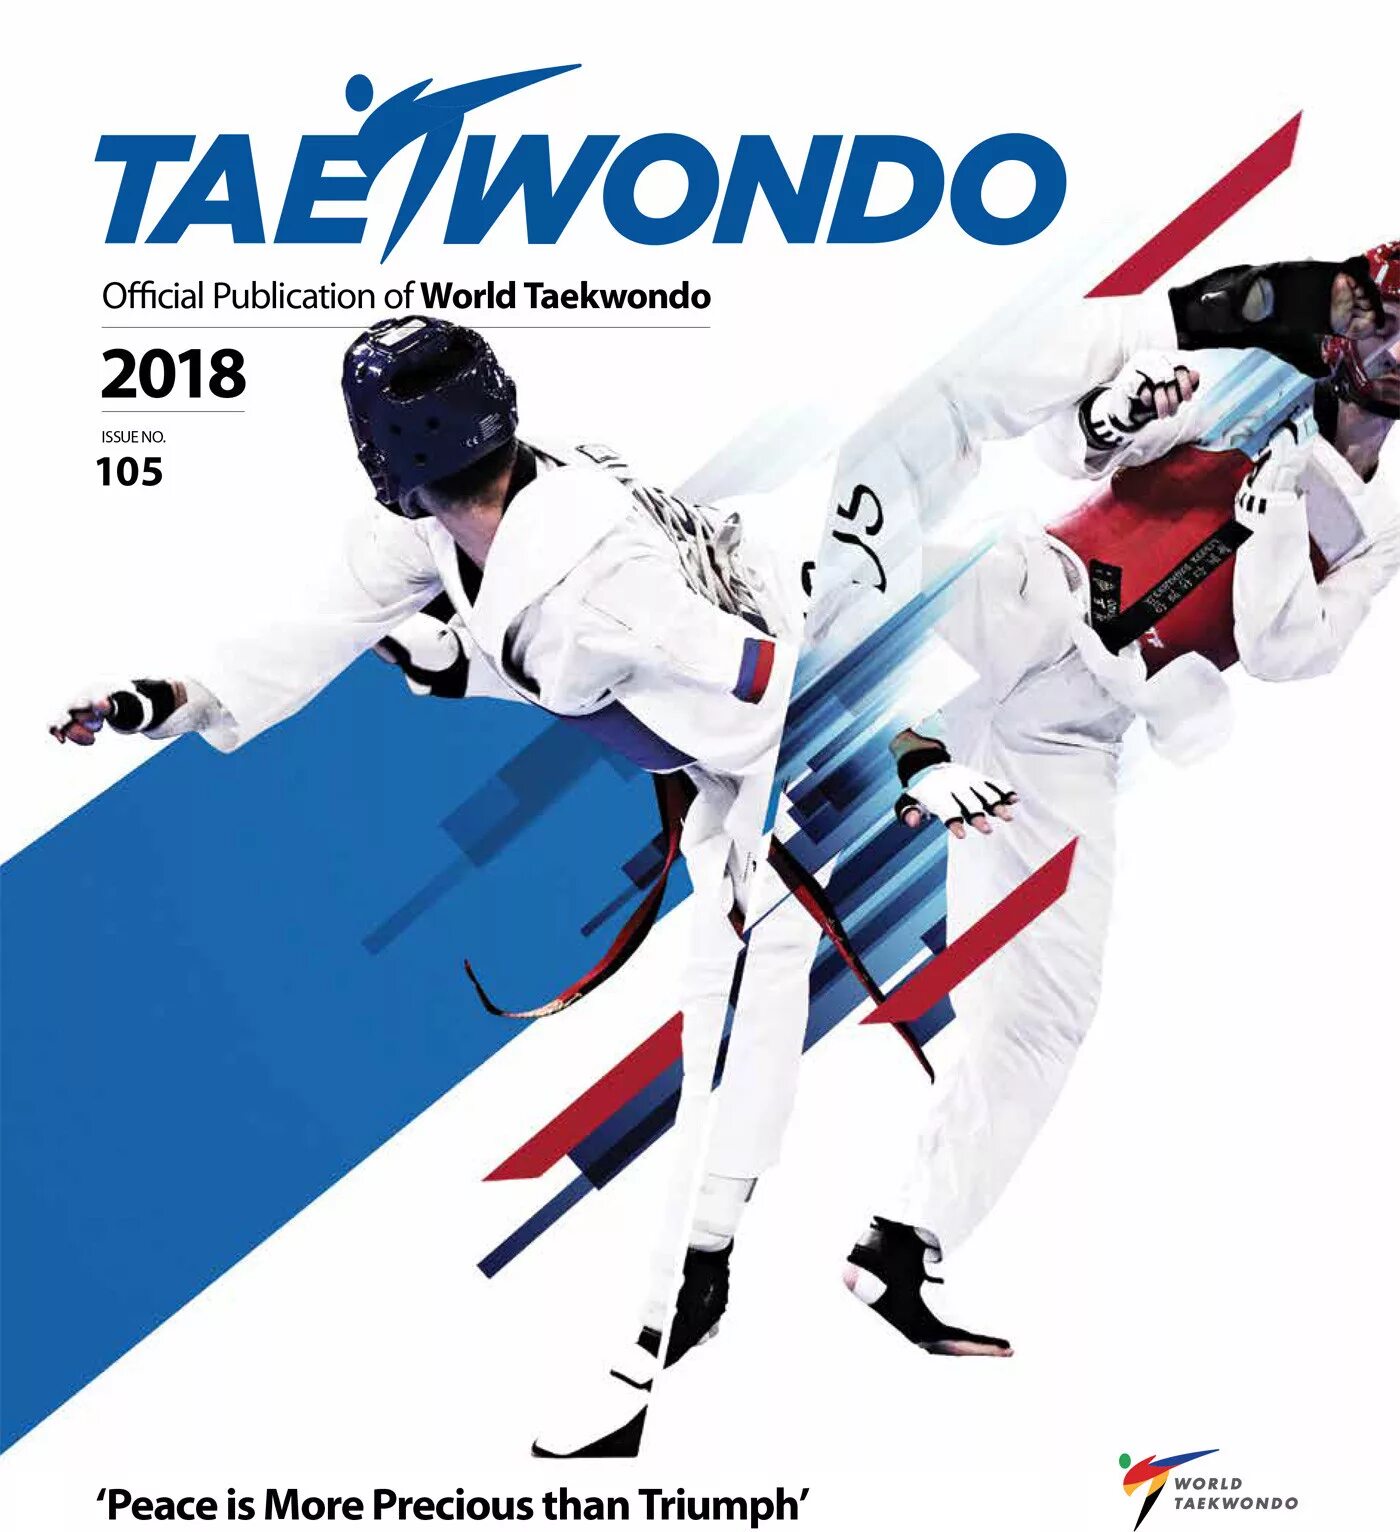 Taekwondo баннер. Баннер тхэквондо ВТФ. Баннер соревнований по тхэквондо. Тхэквондо баннер рекламный.